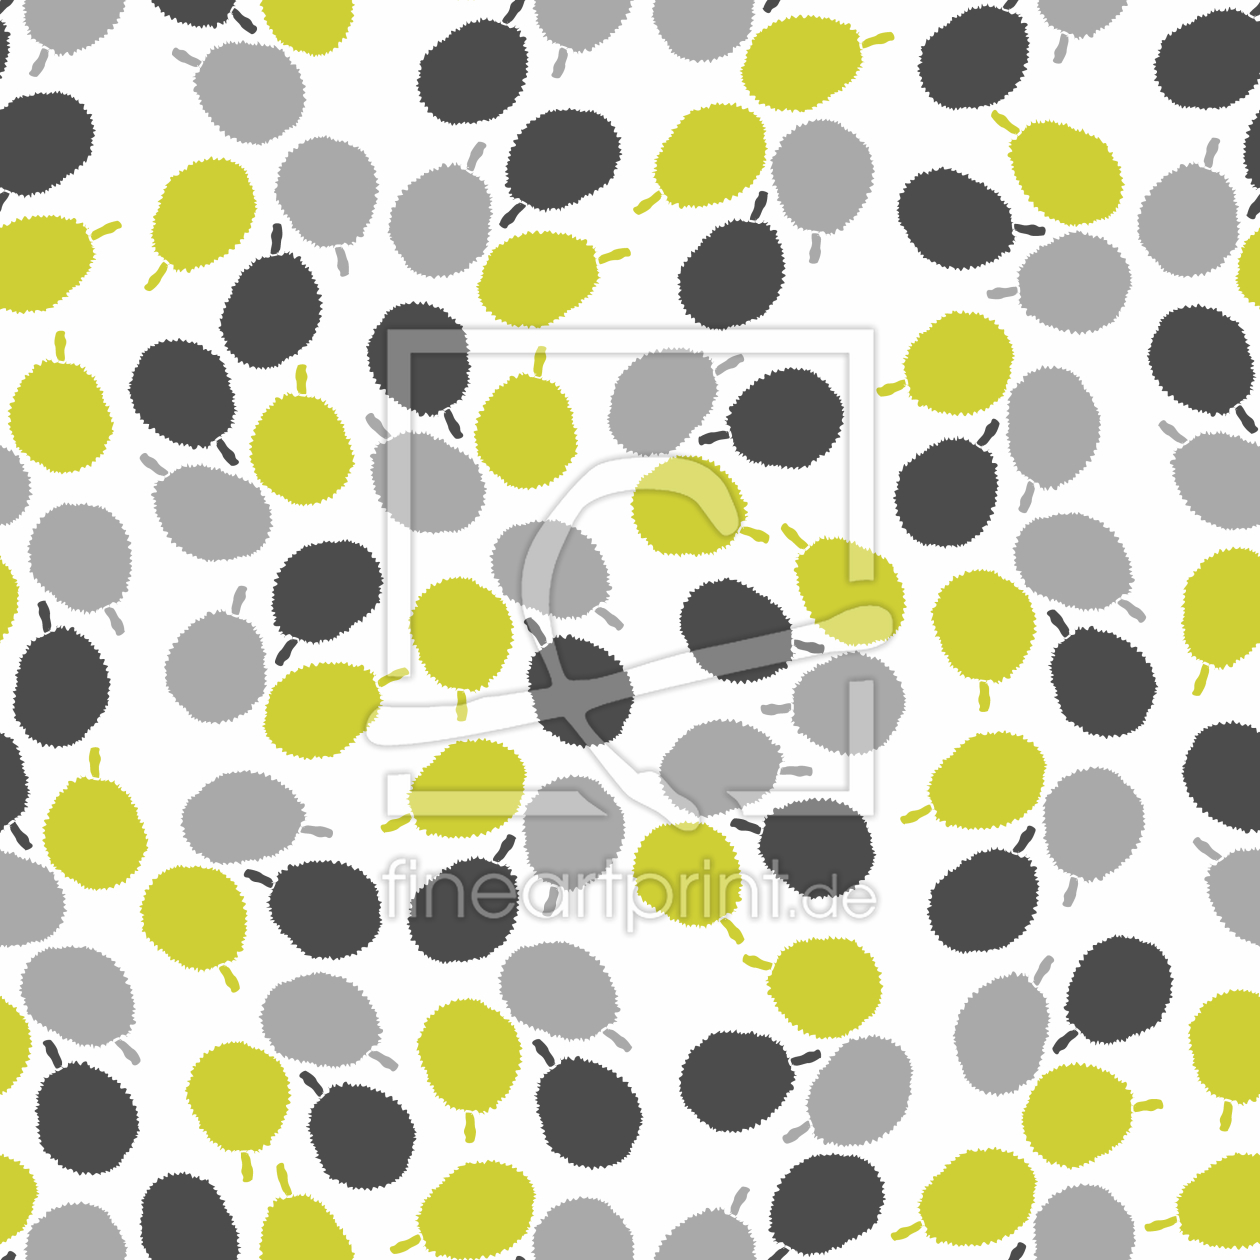 Bild-Nr.: 9007672 Obst Rätsel erstellt von patterndesigns-com